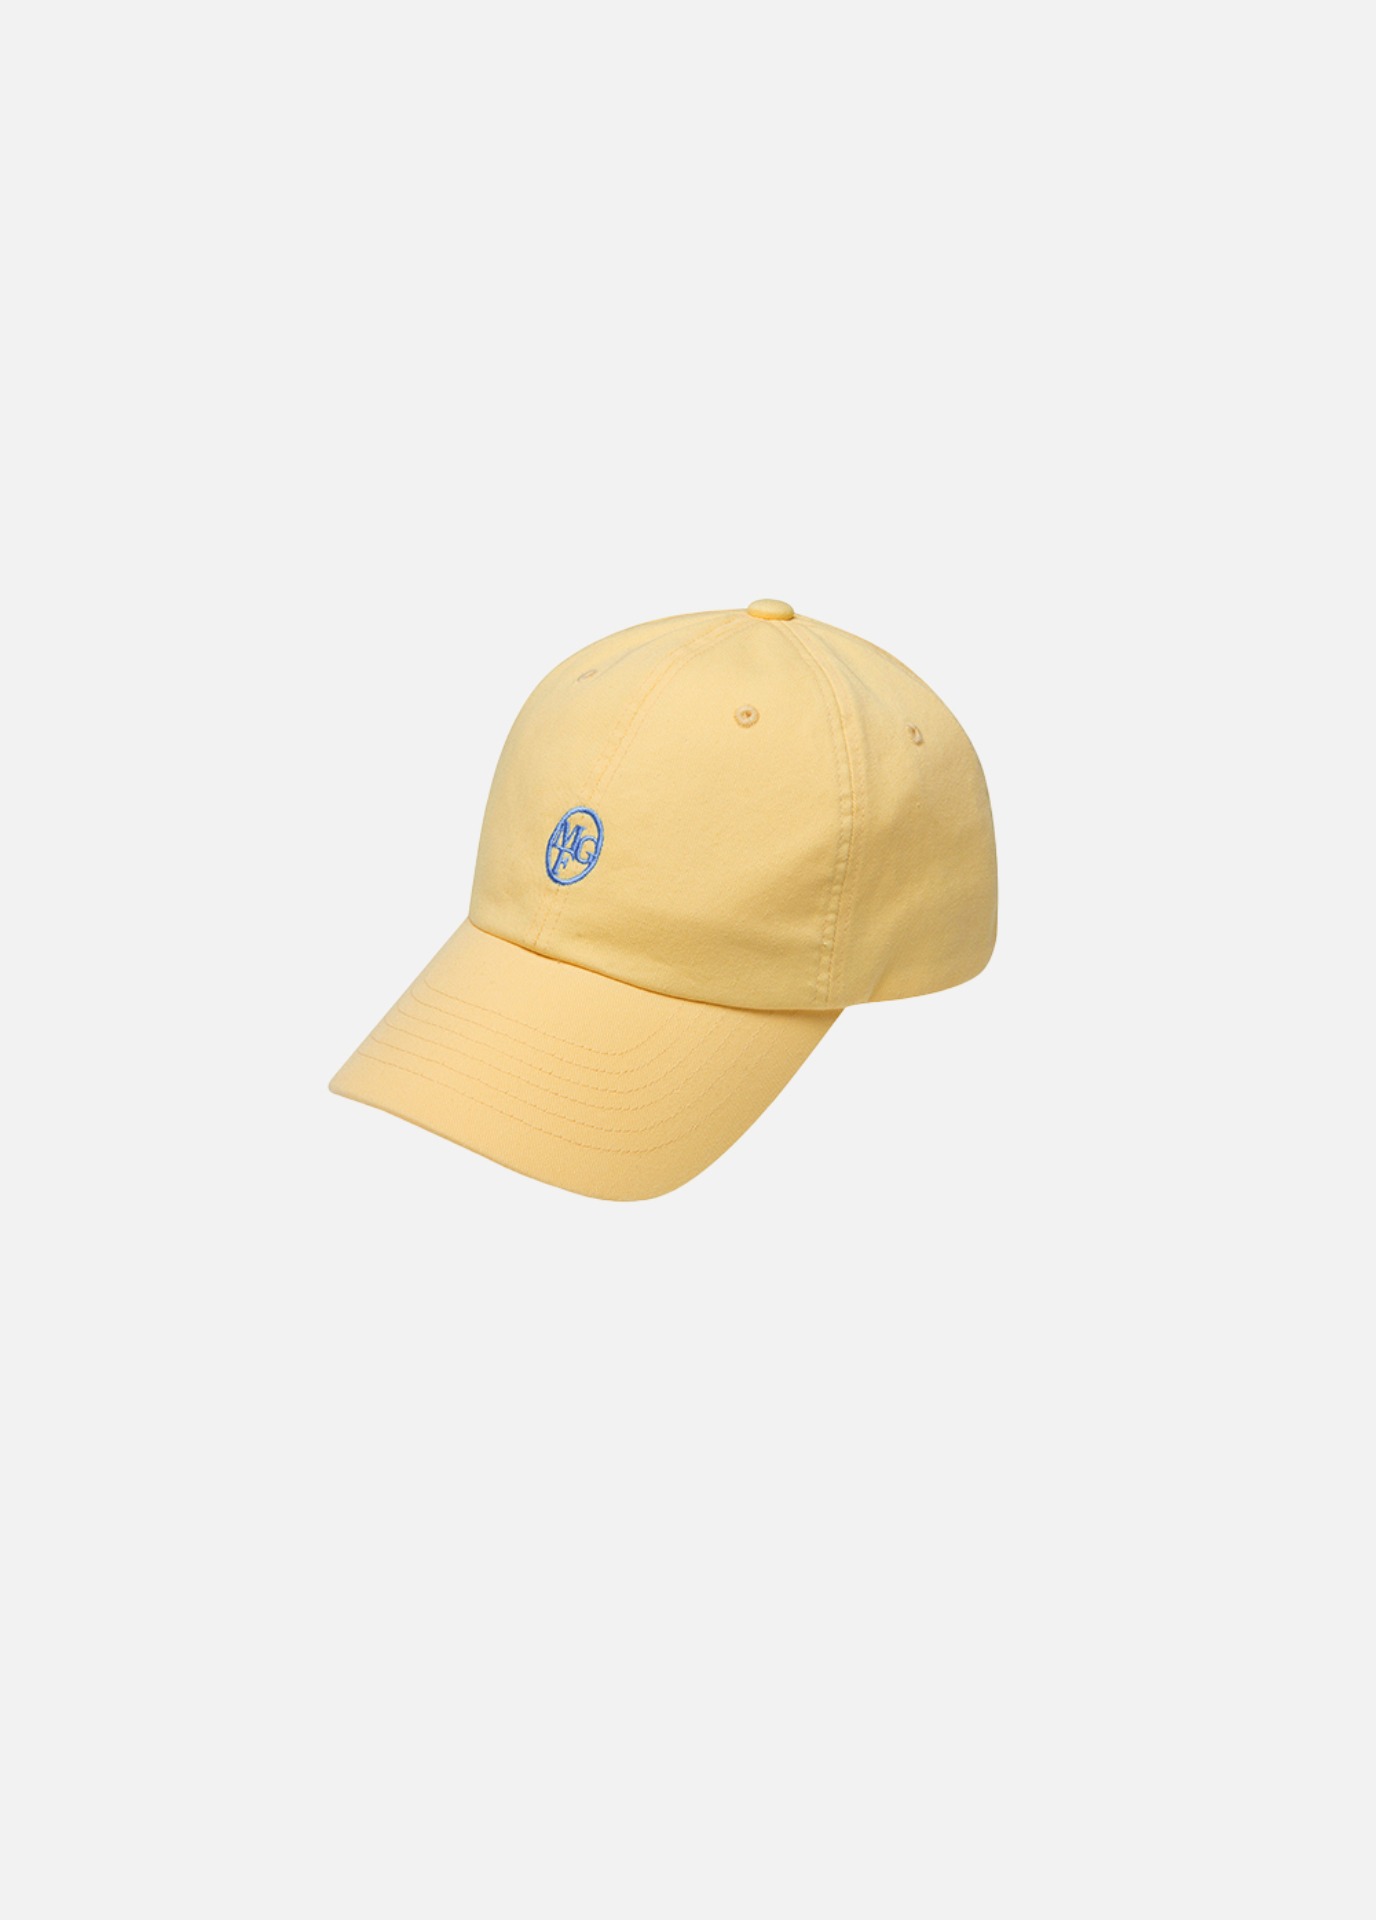 EMBROIDERY LOGO CAP light yellow